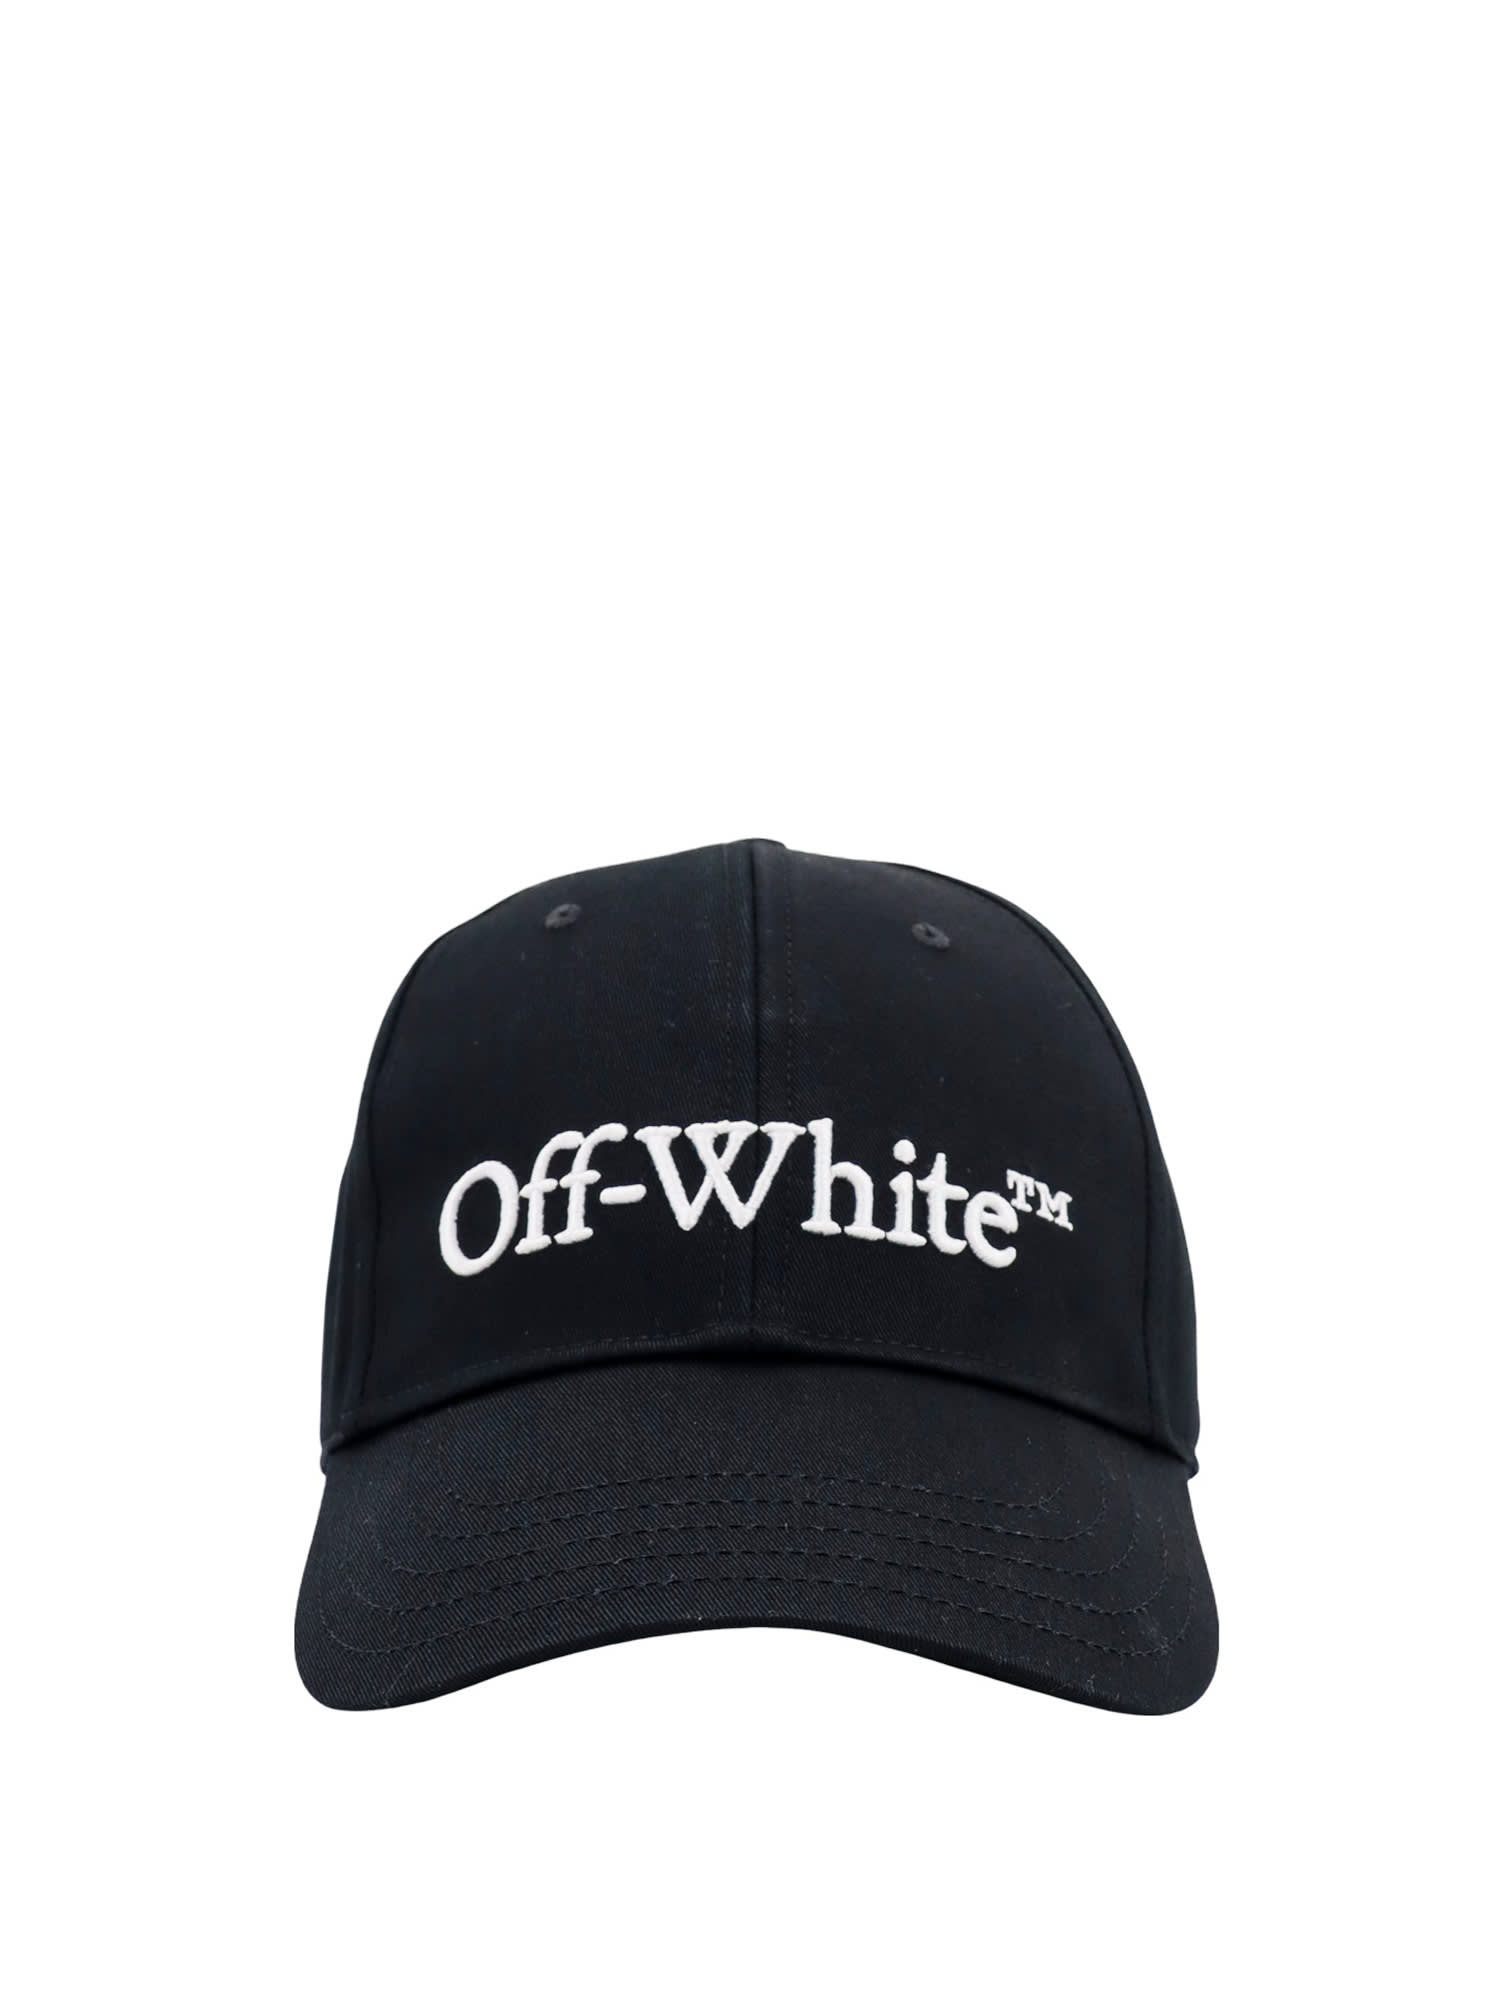 OFF-WHITE HAT